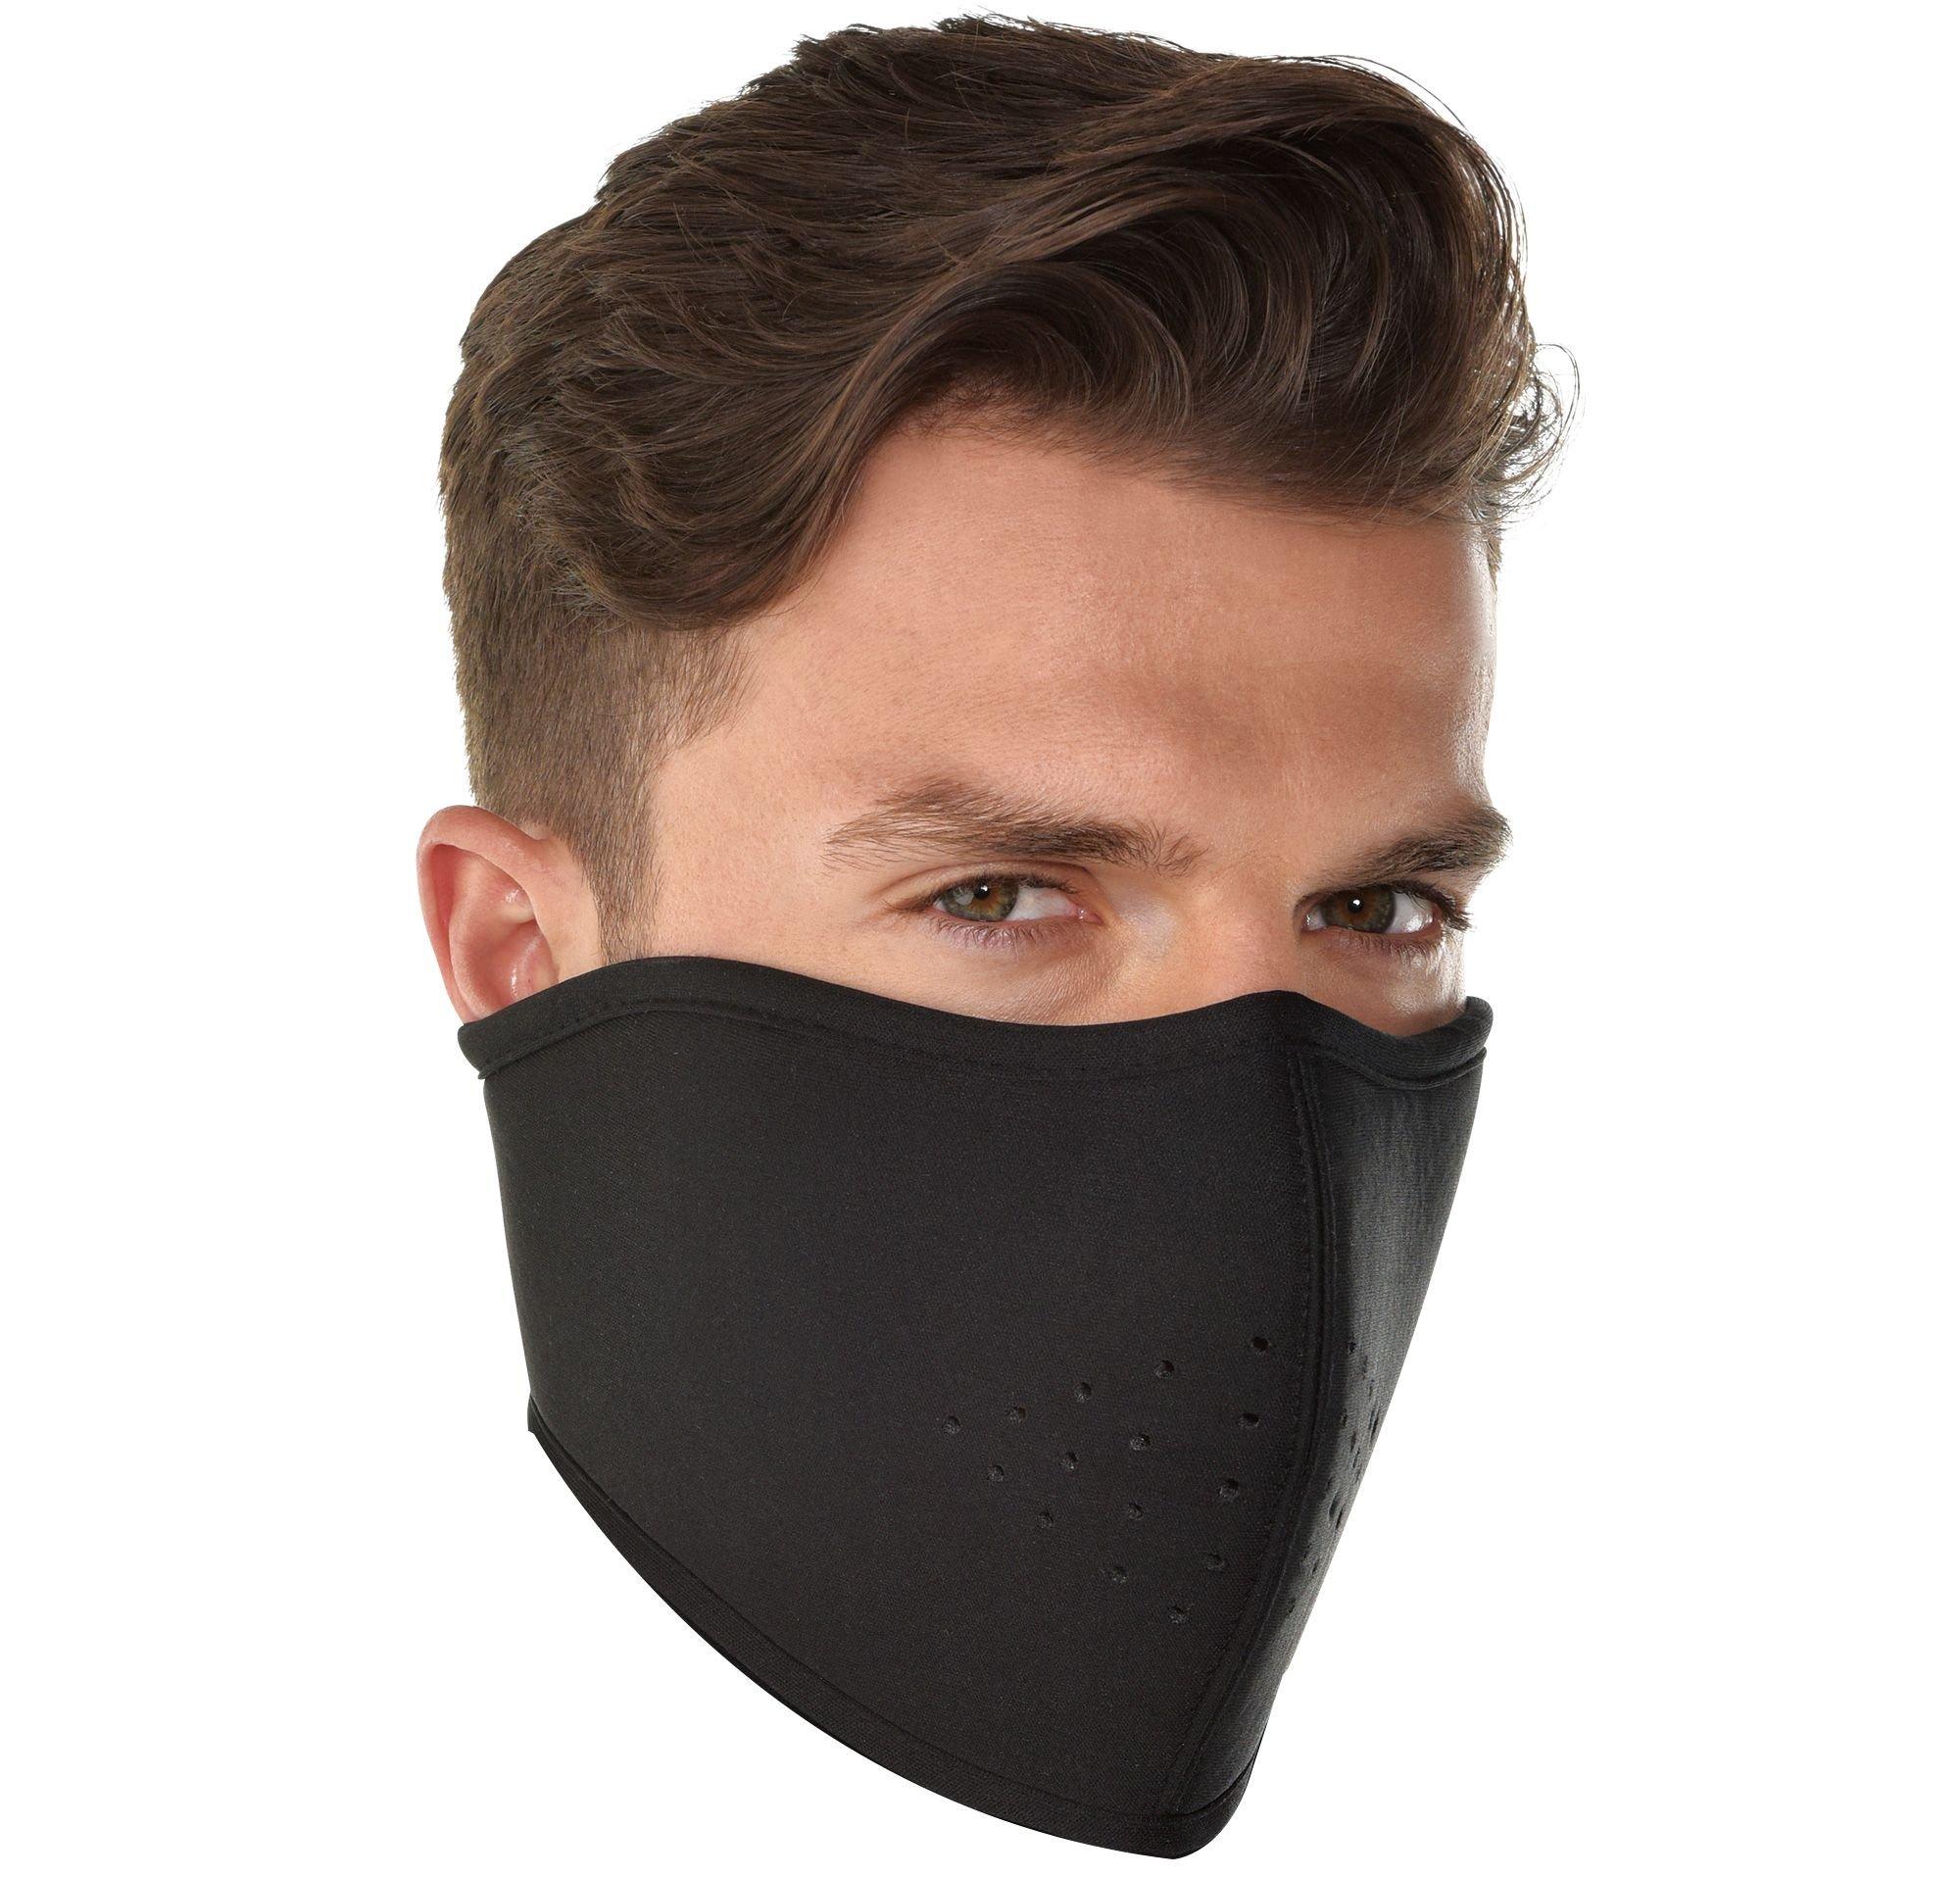 Black Ninja Mask